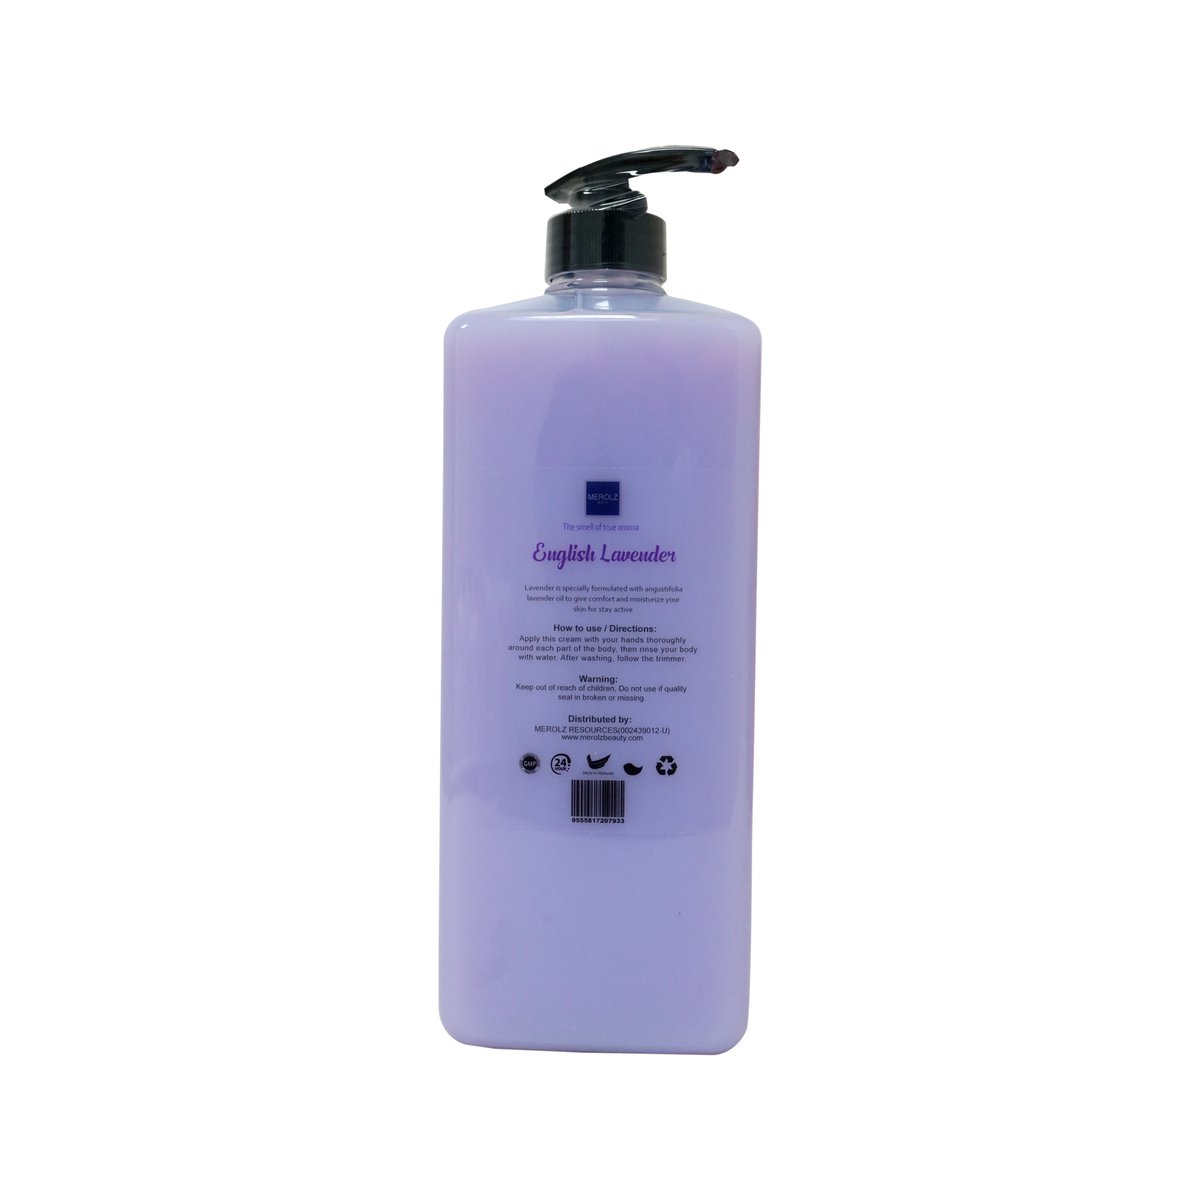 Merolz Bath Aroma Therapy English Lavender 1000ml